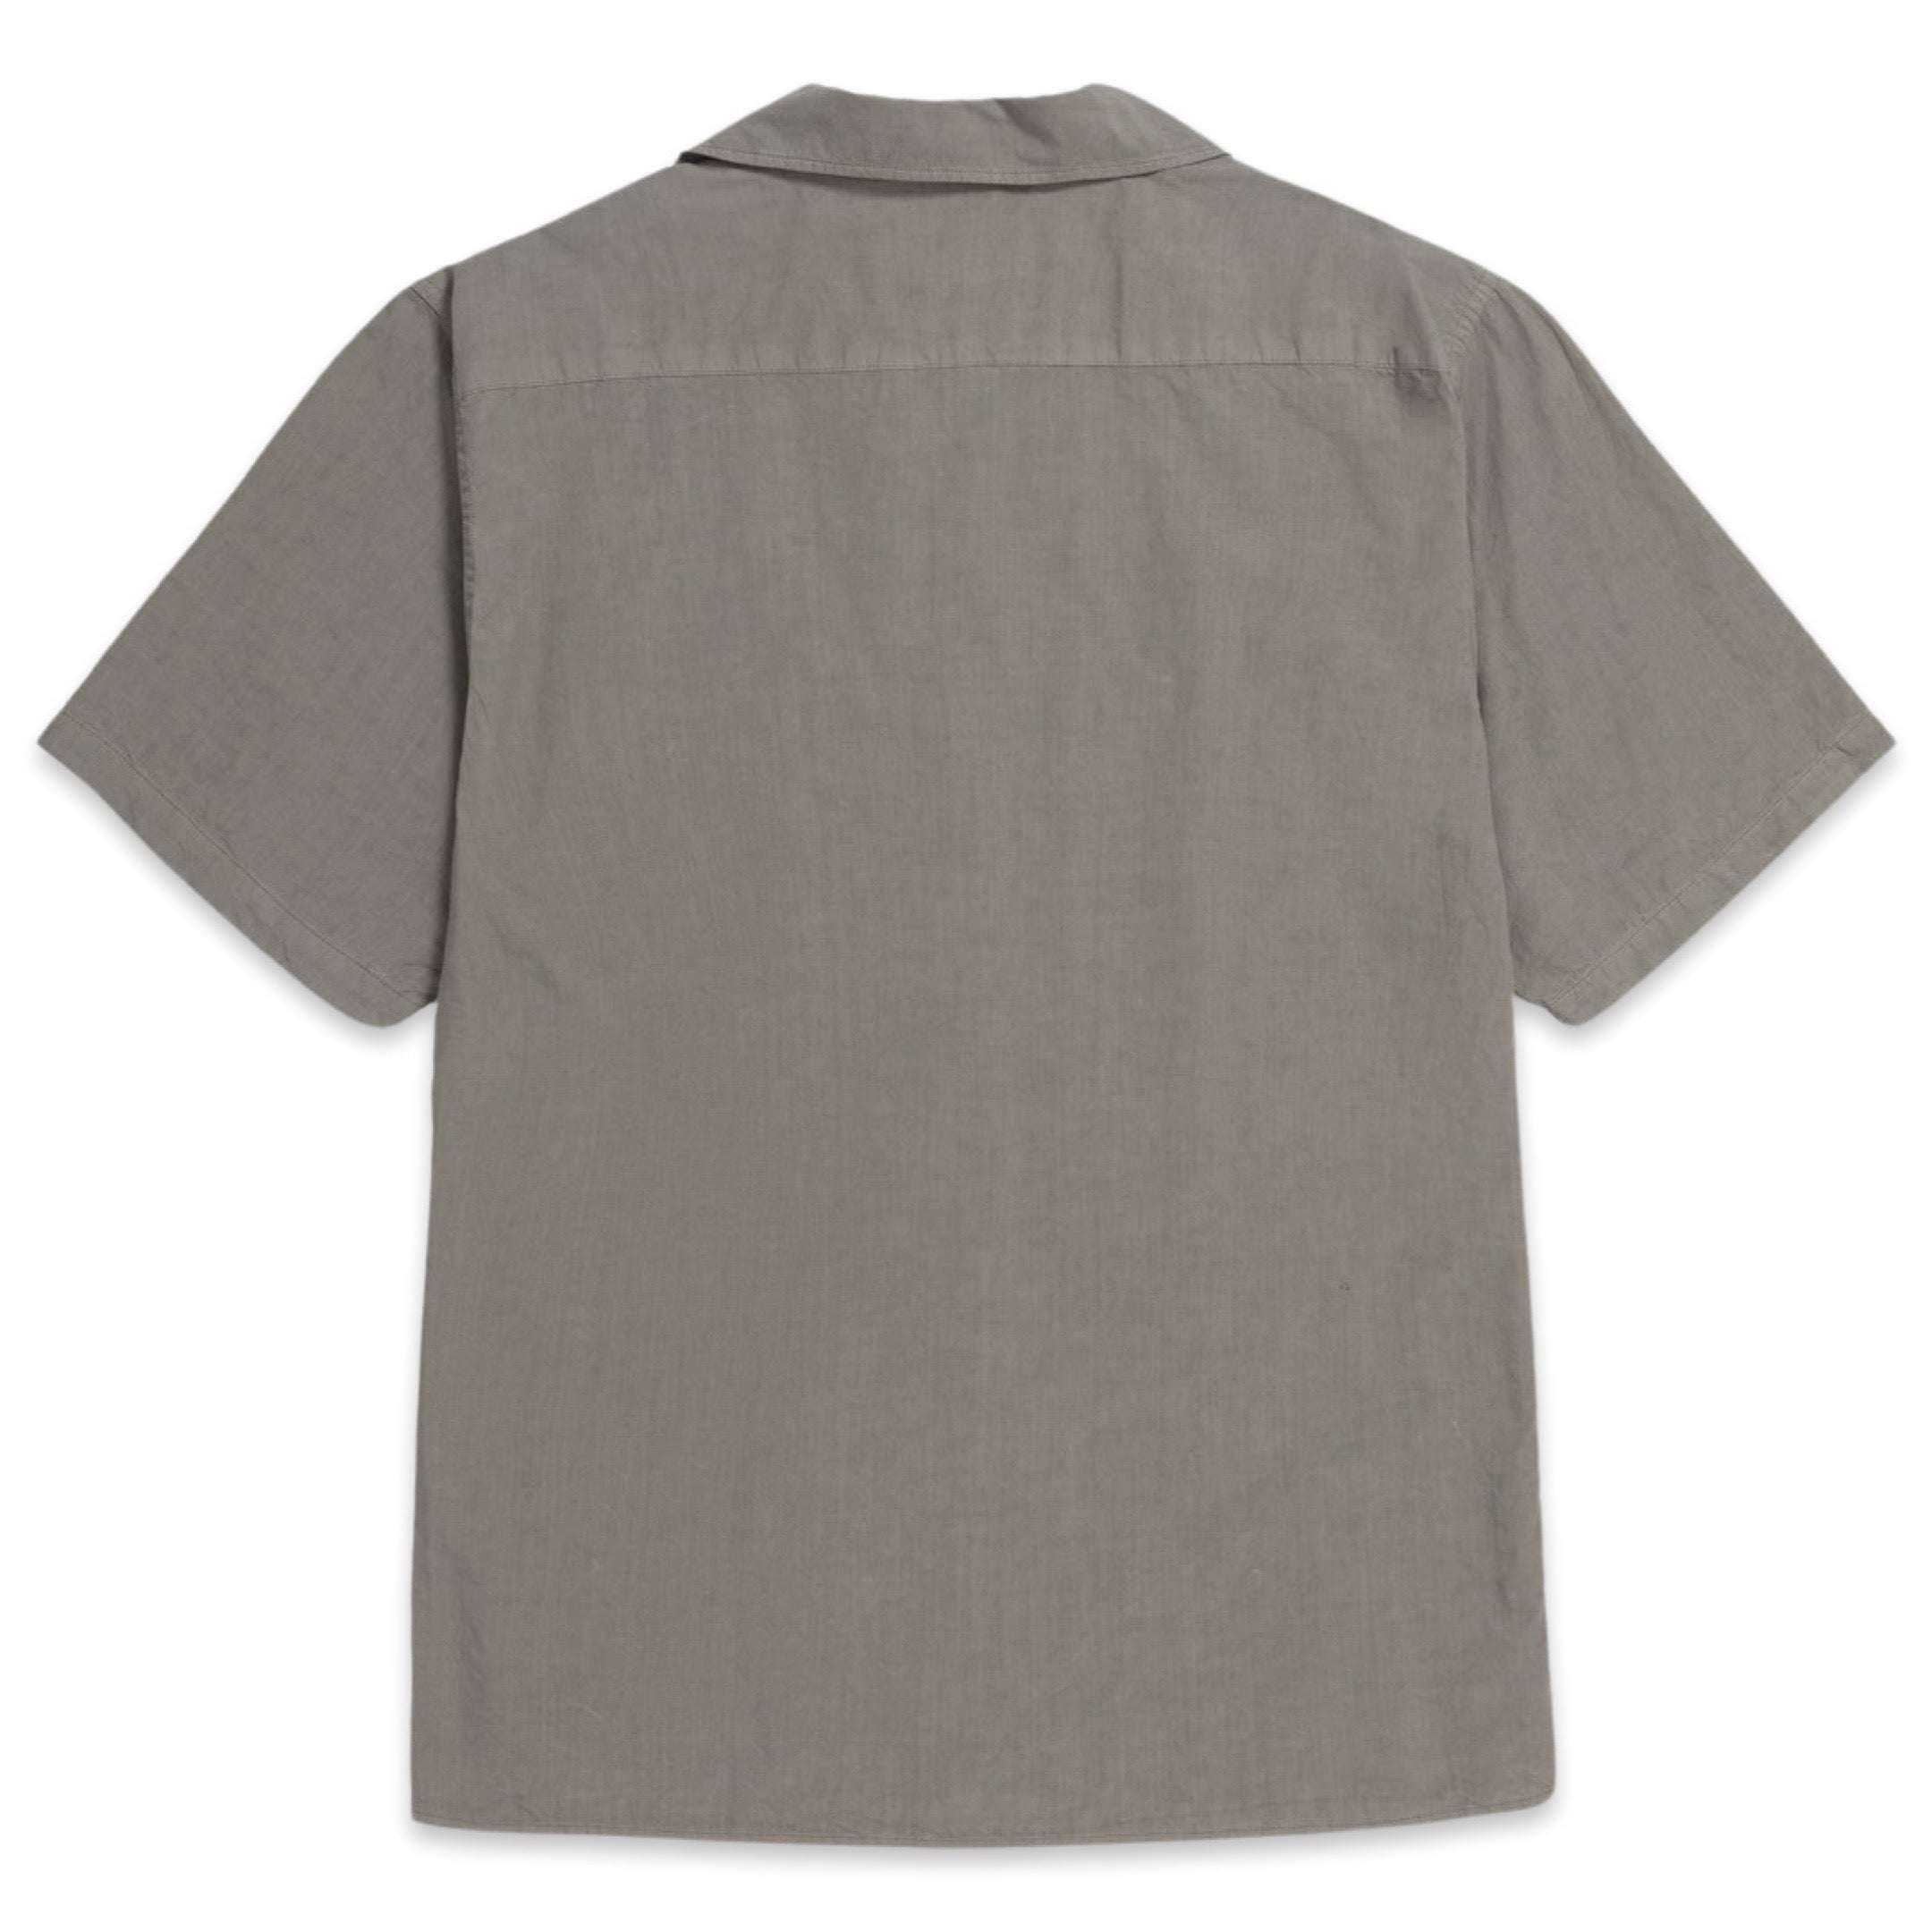 Carsten Cotton Tencel Shirt (Mid Khaki)